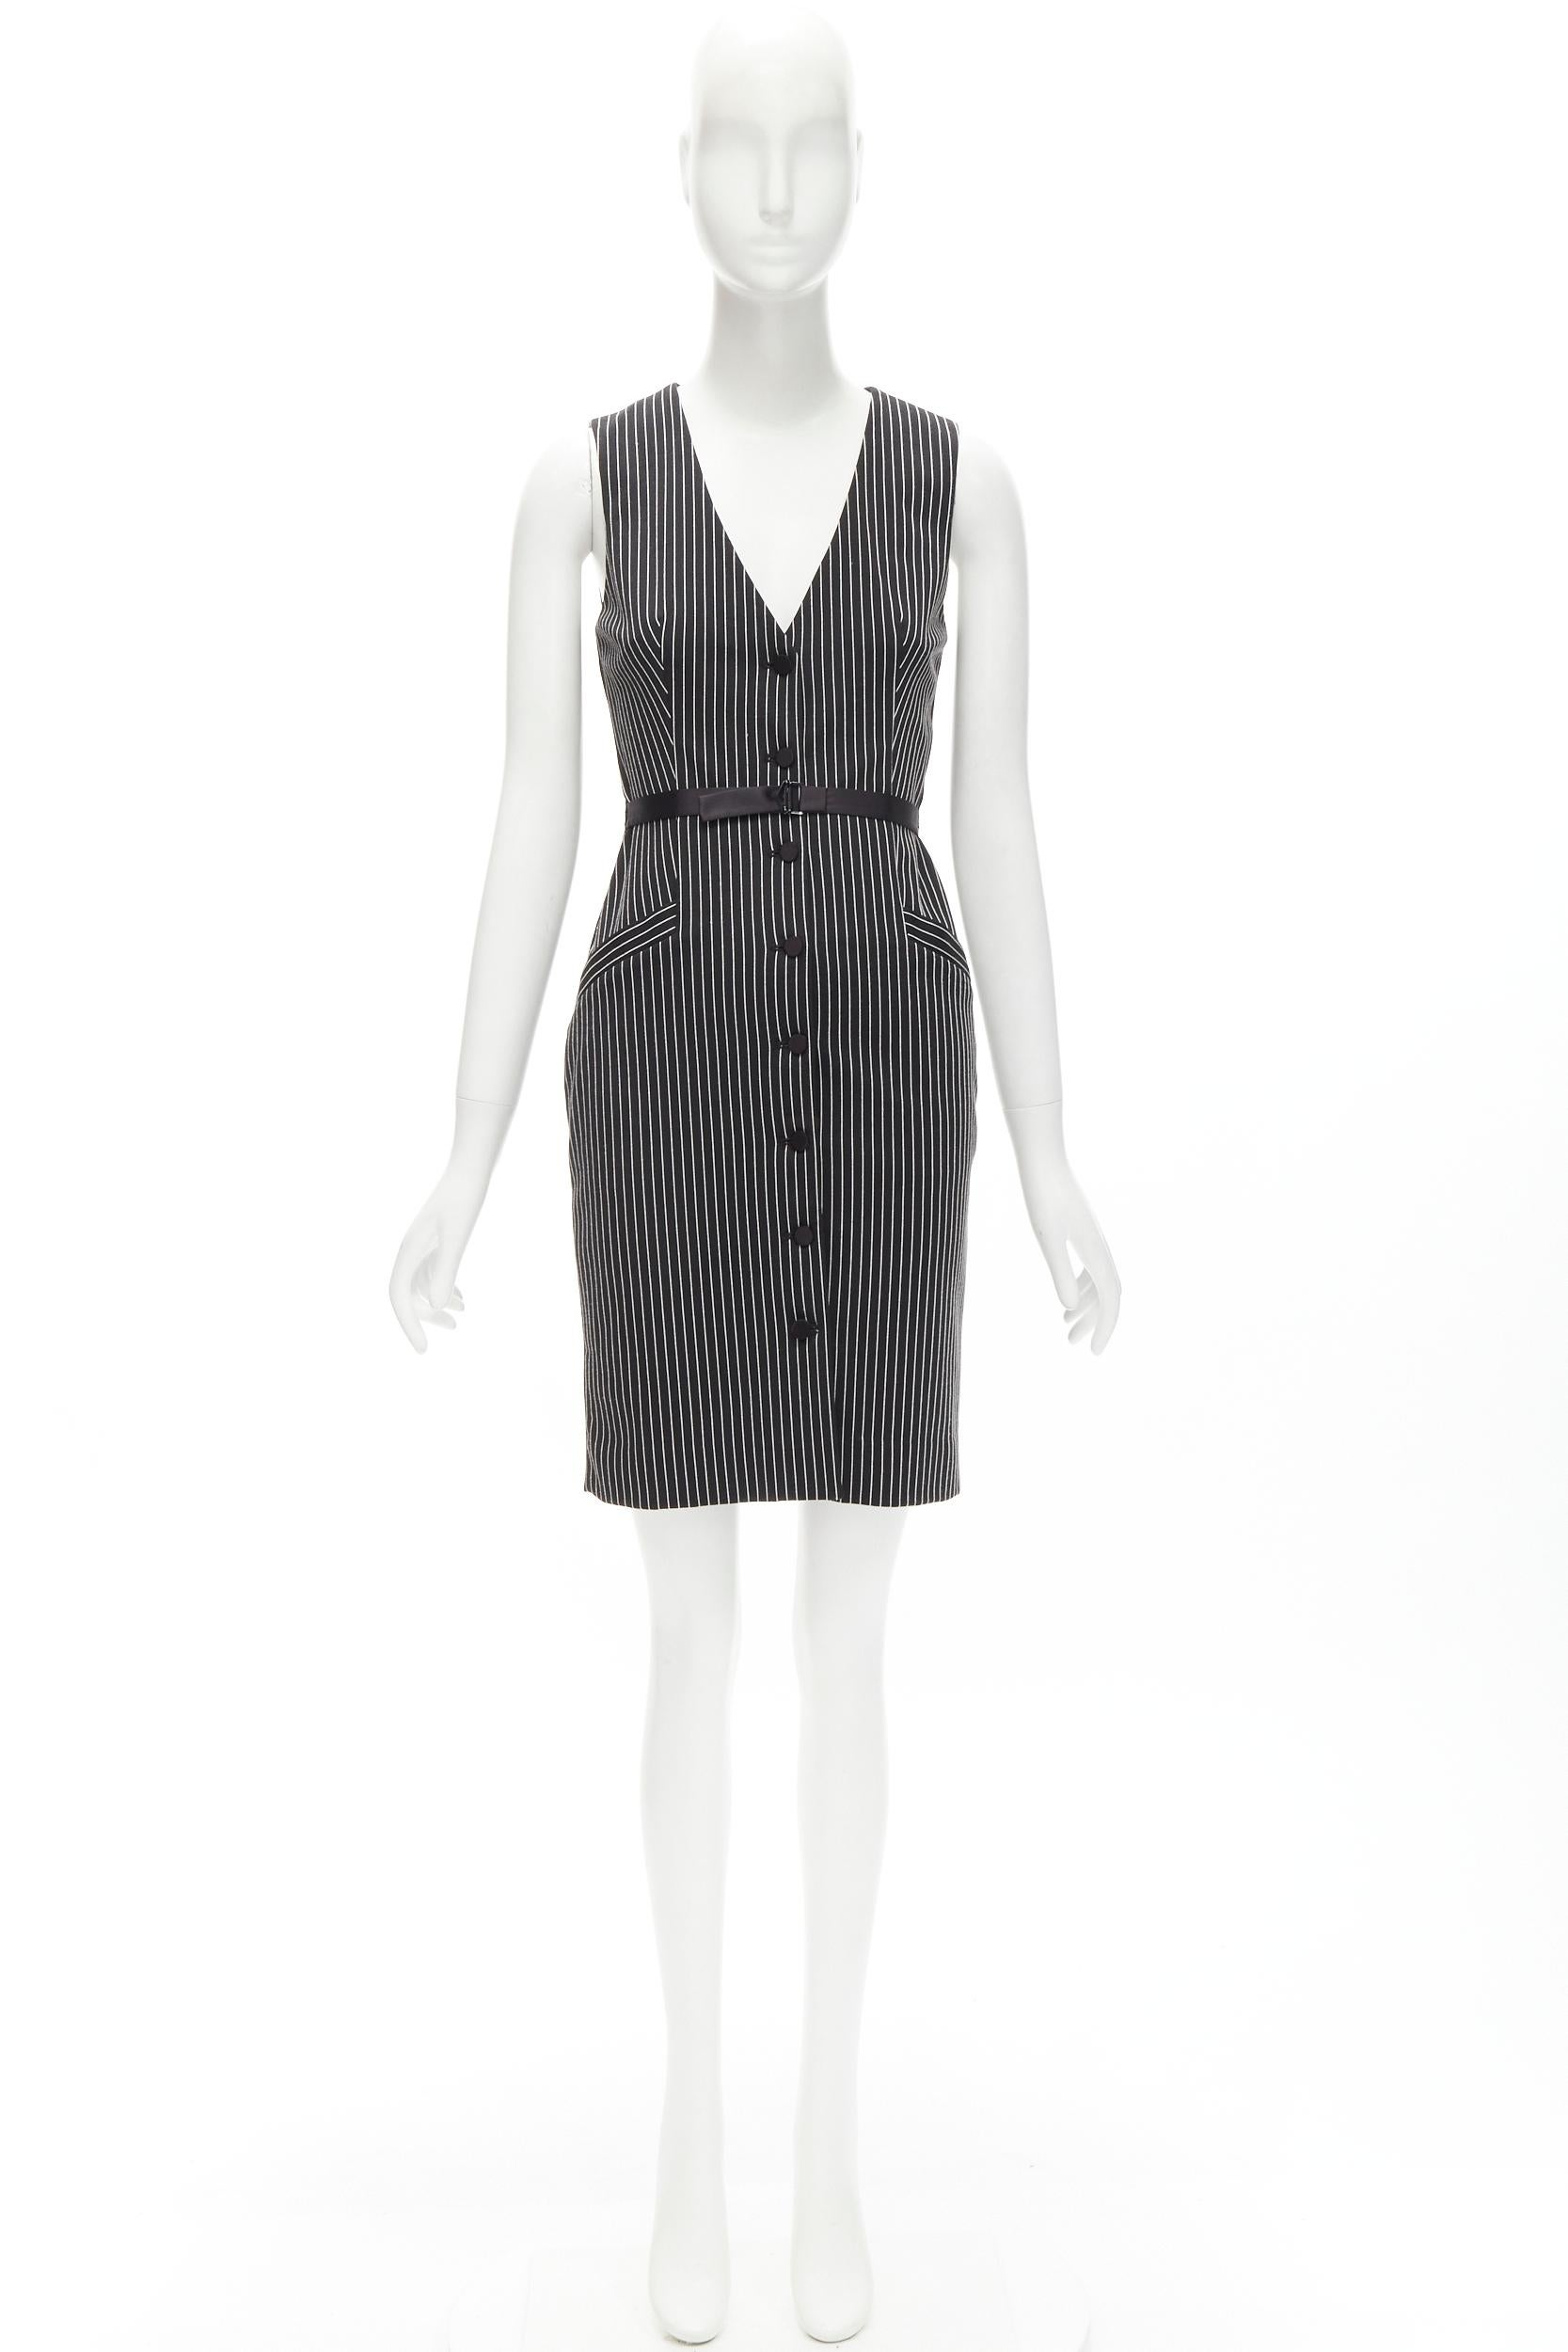 DIANE VON FURSTENBERG Gilet Dress black white vertical pinstripes dress US0 XS For Sale 6